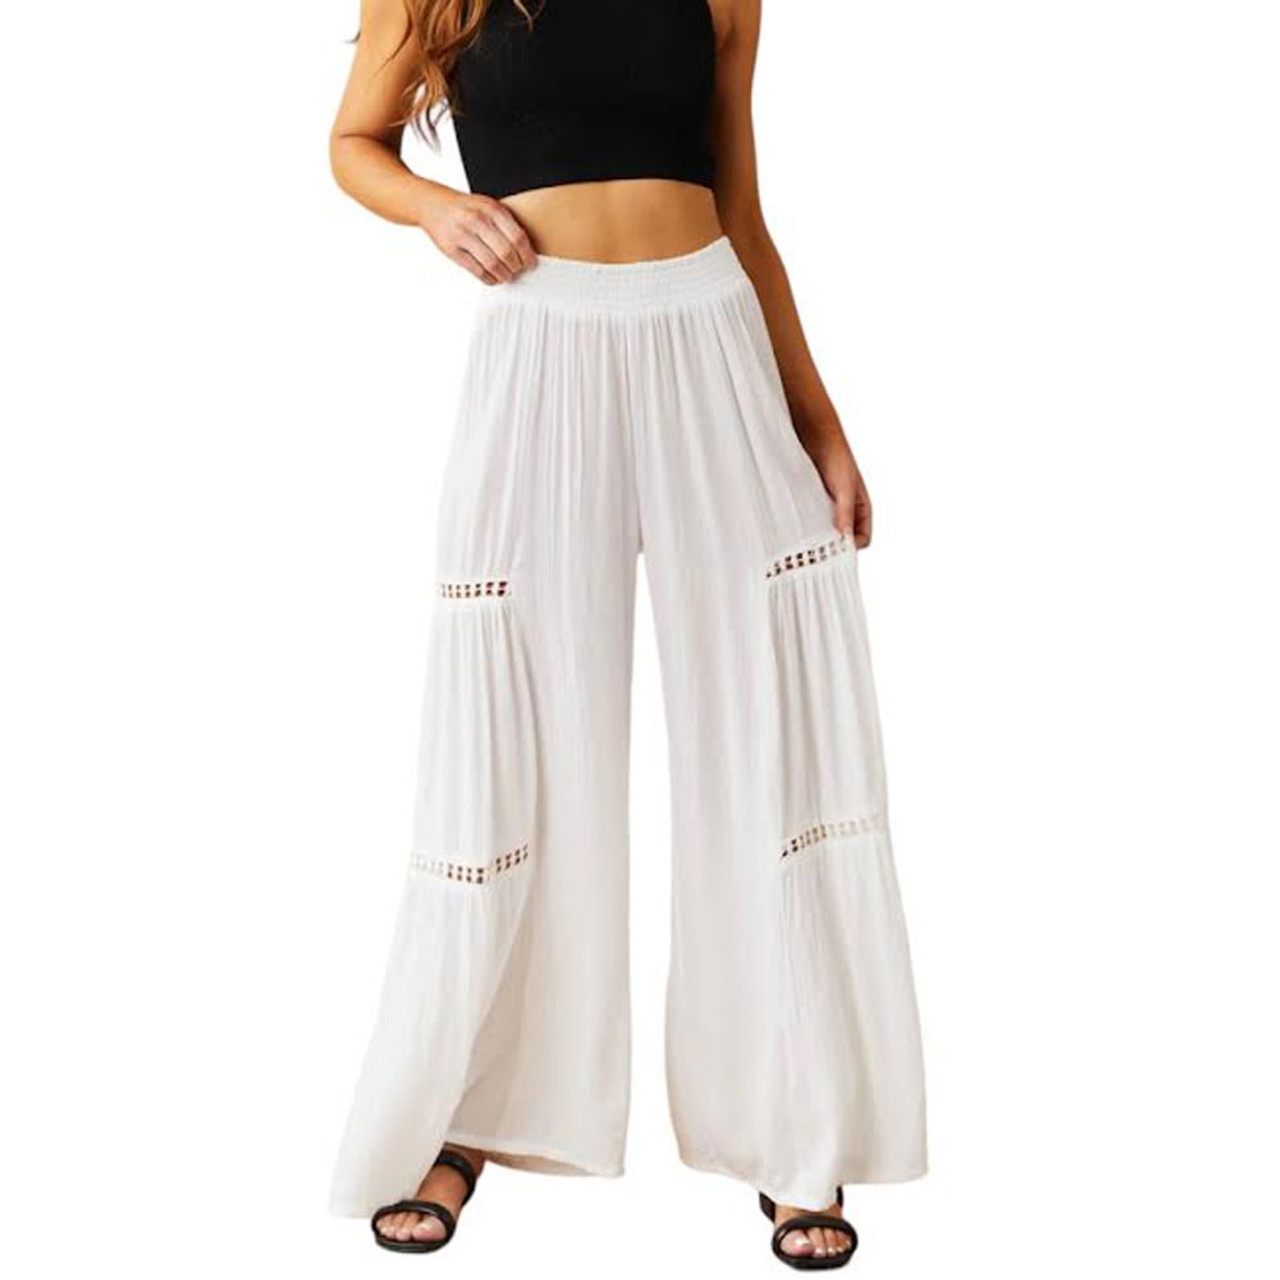 Solid White Wide Leg Long Summer Palazzo Pants | White | Split-Skirts-Pants,  XL-Plus, Tall, Misses